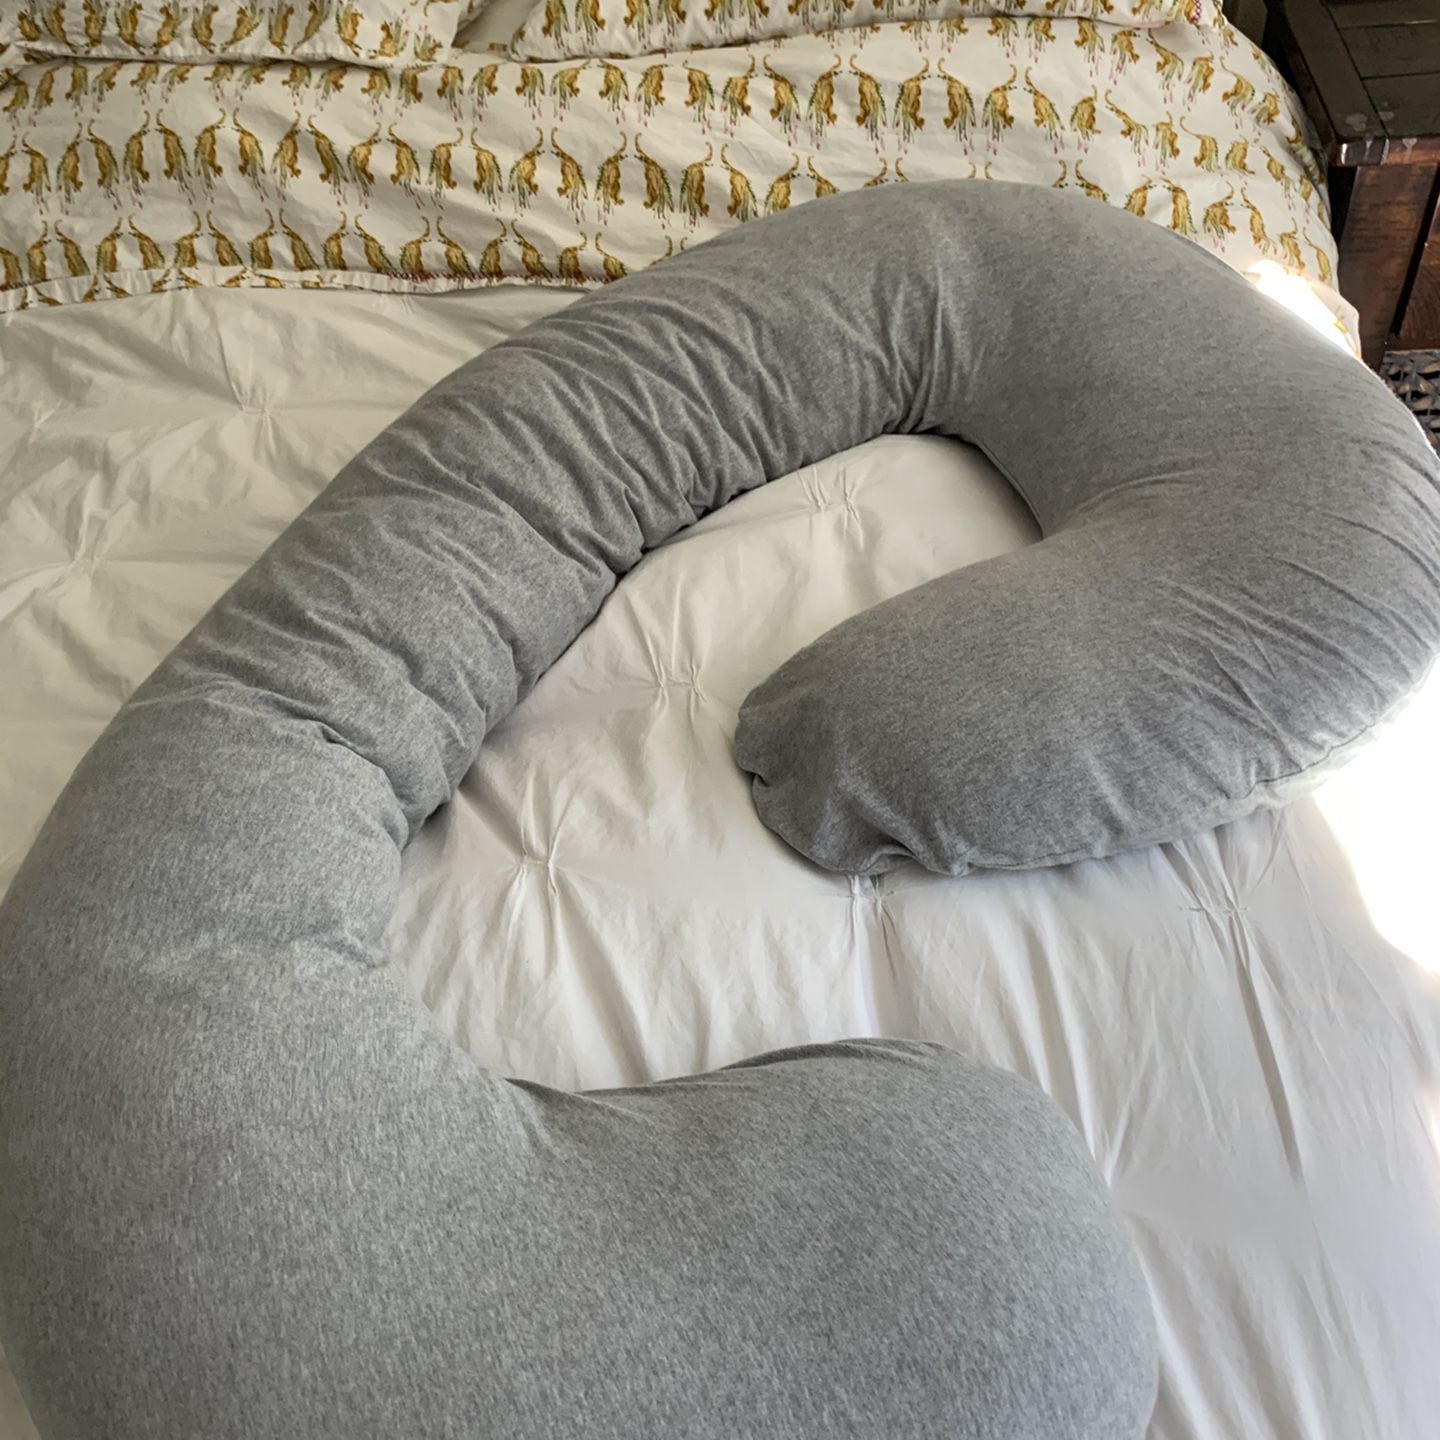 LeachCo Snuggle Chic maternity Body Pillow.